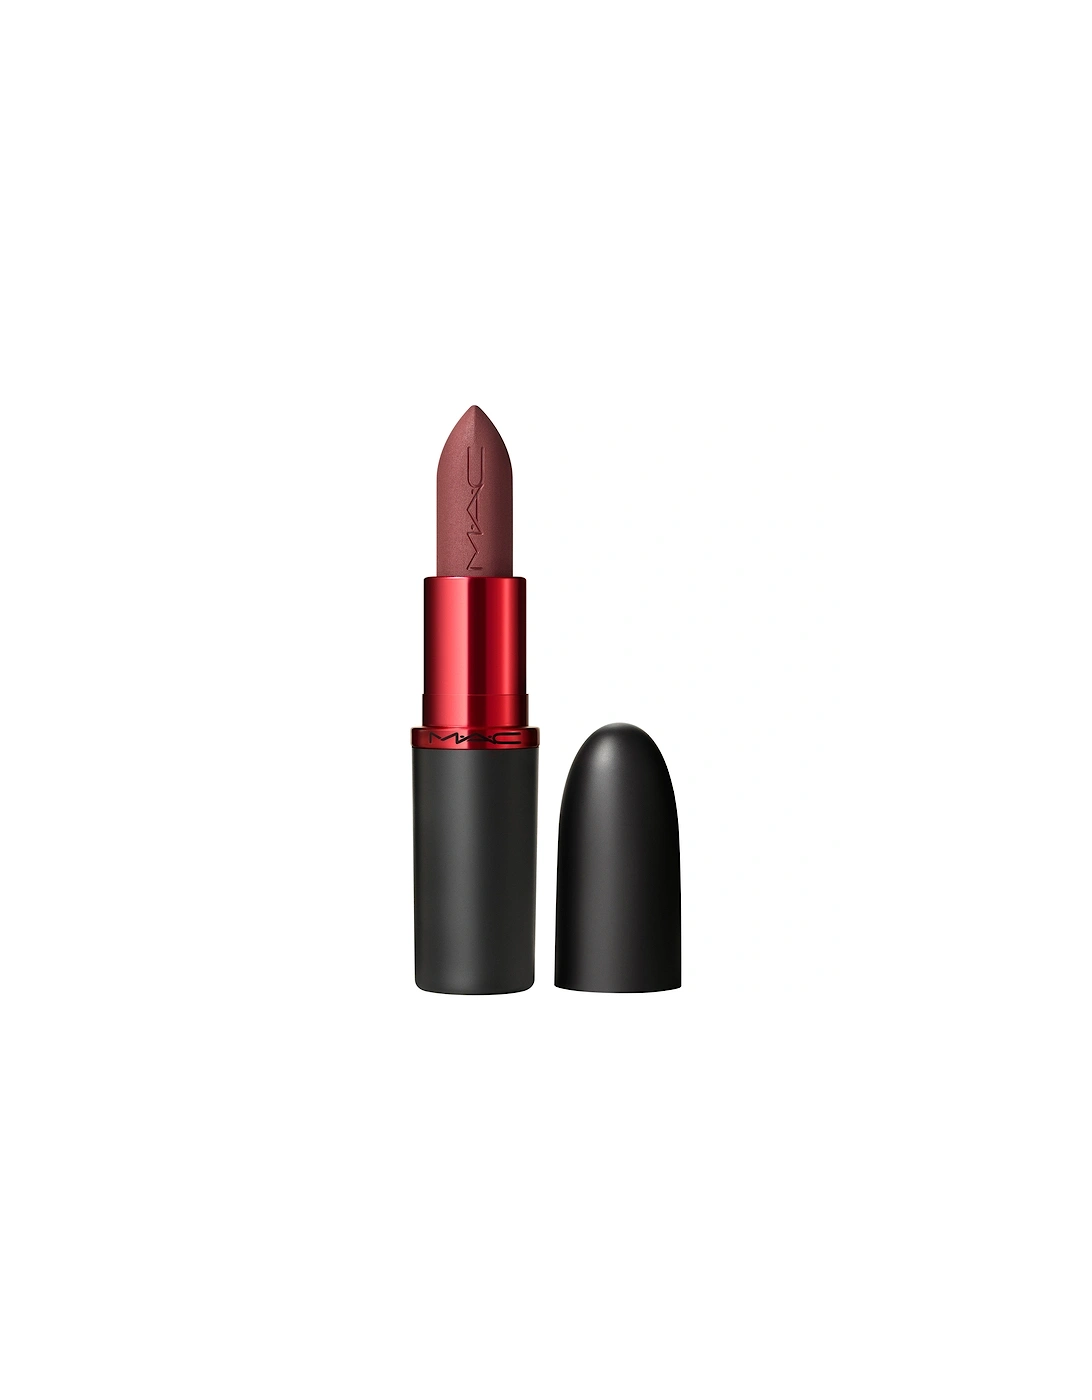 Macximal Matte Viva Glam Lipstick - Viva Equality, 2 of 1